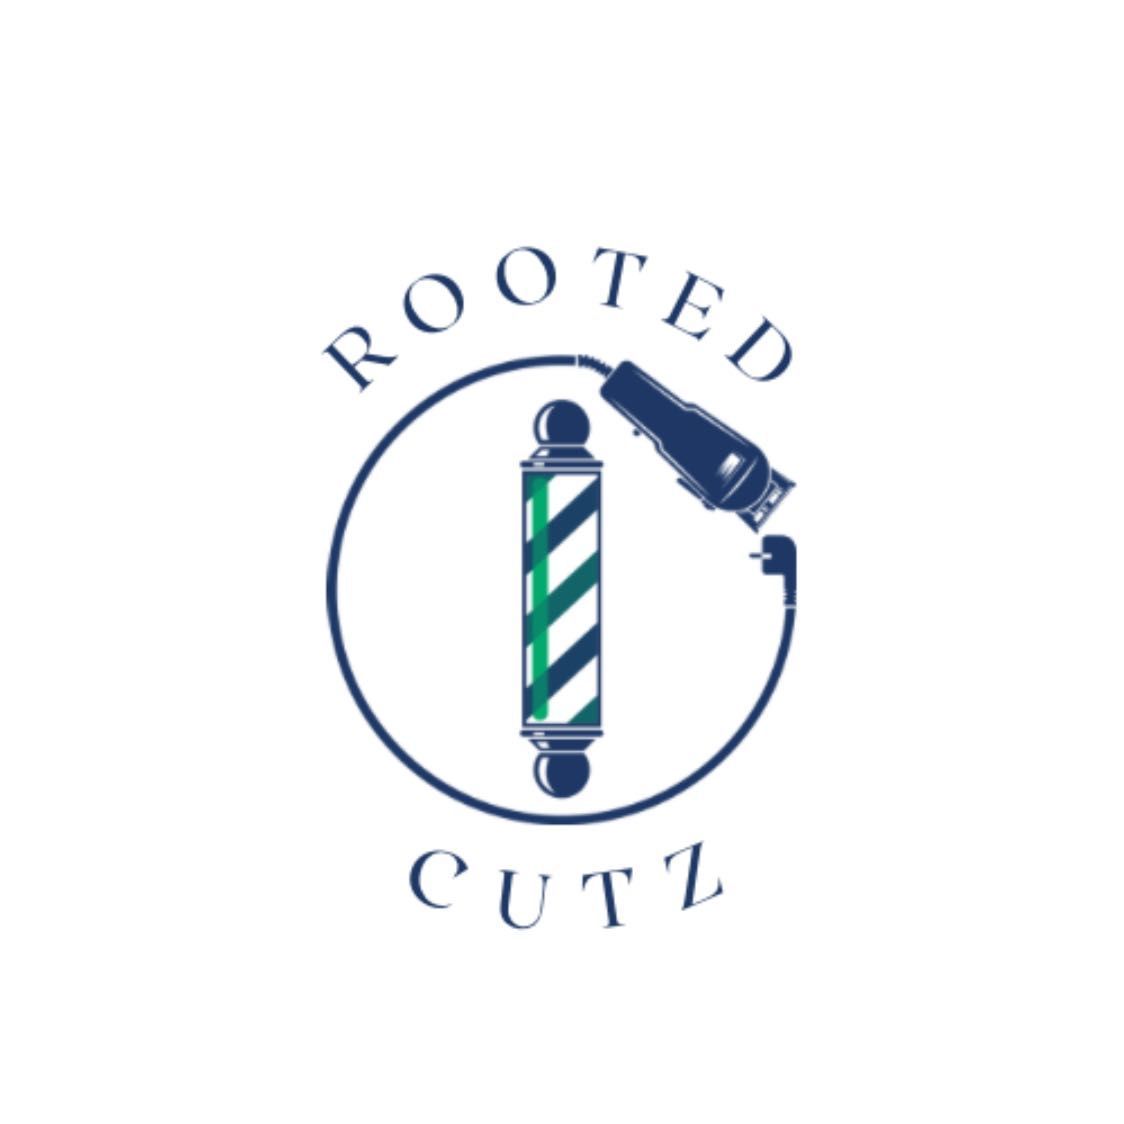 Rooted_Cutz, 1963 Zinfandel Dr, Rancho Cordova, 95670